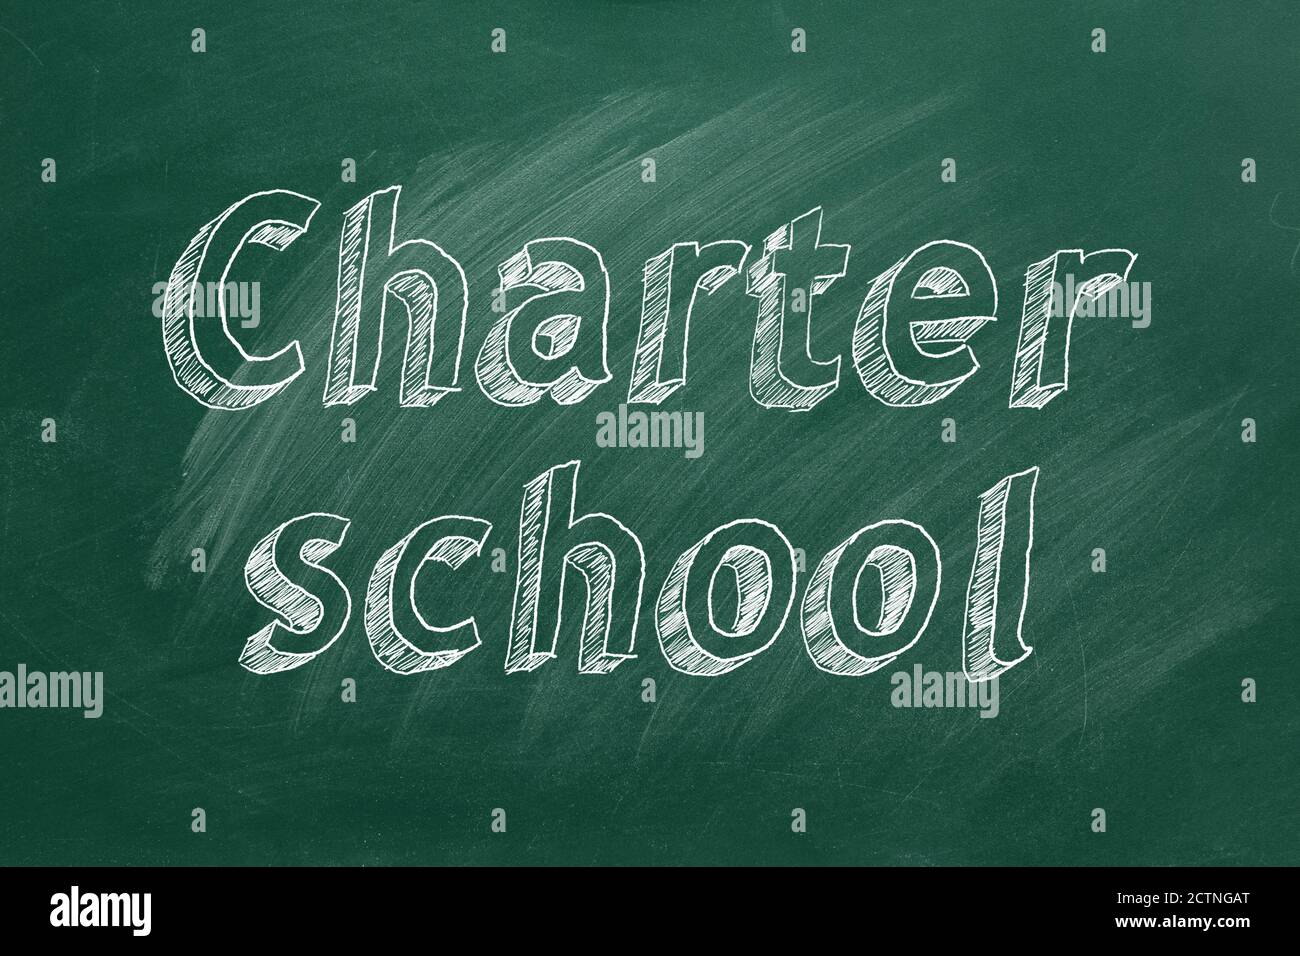 Hand drawing 'Charter school' on green chalkboard Stock Photo